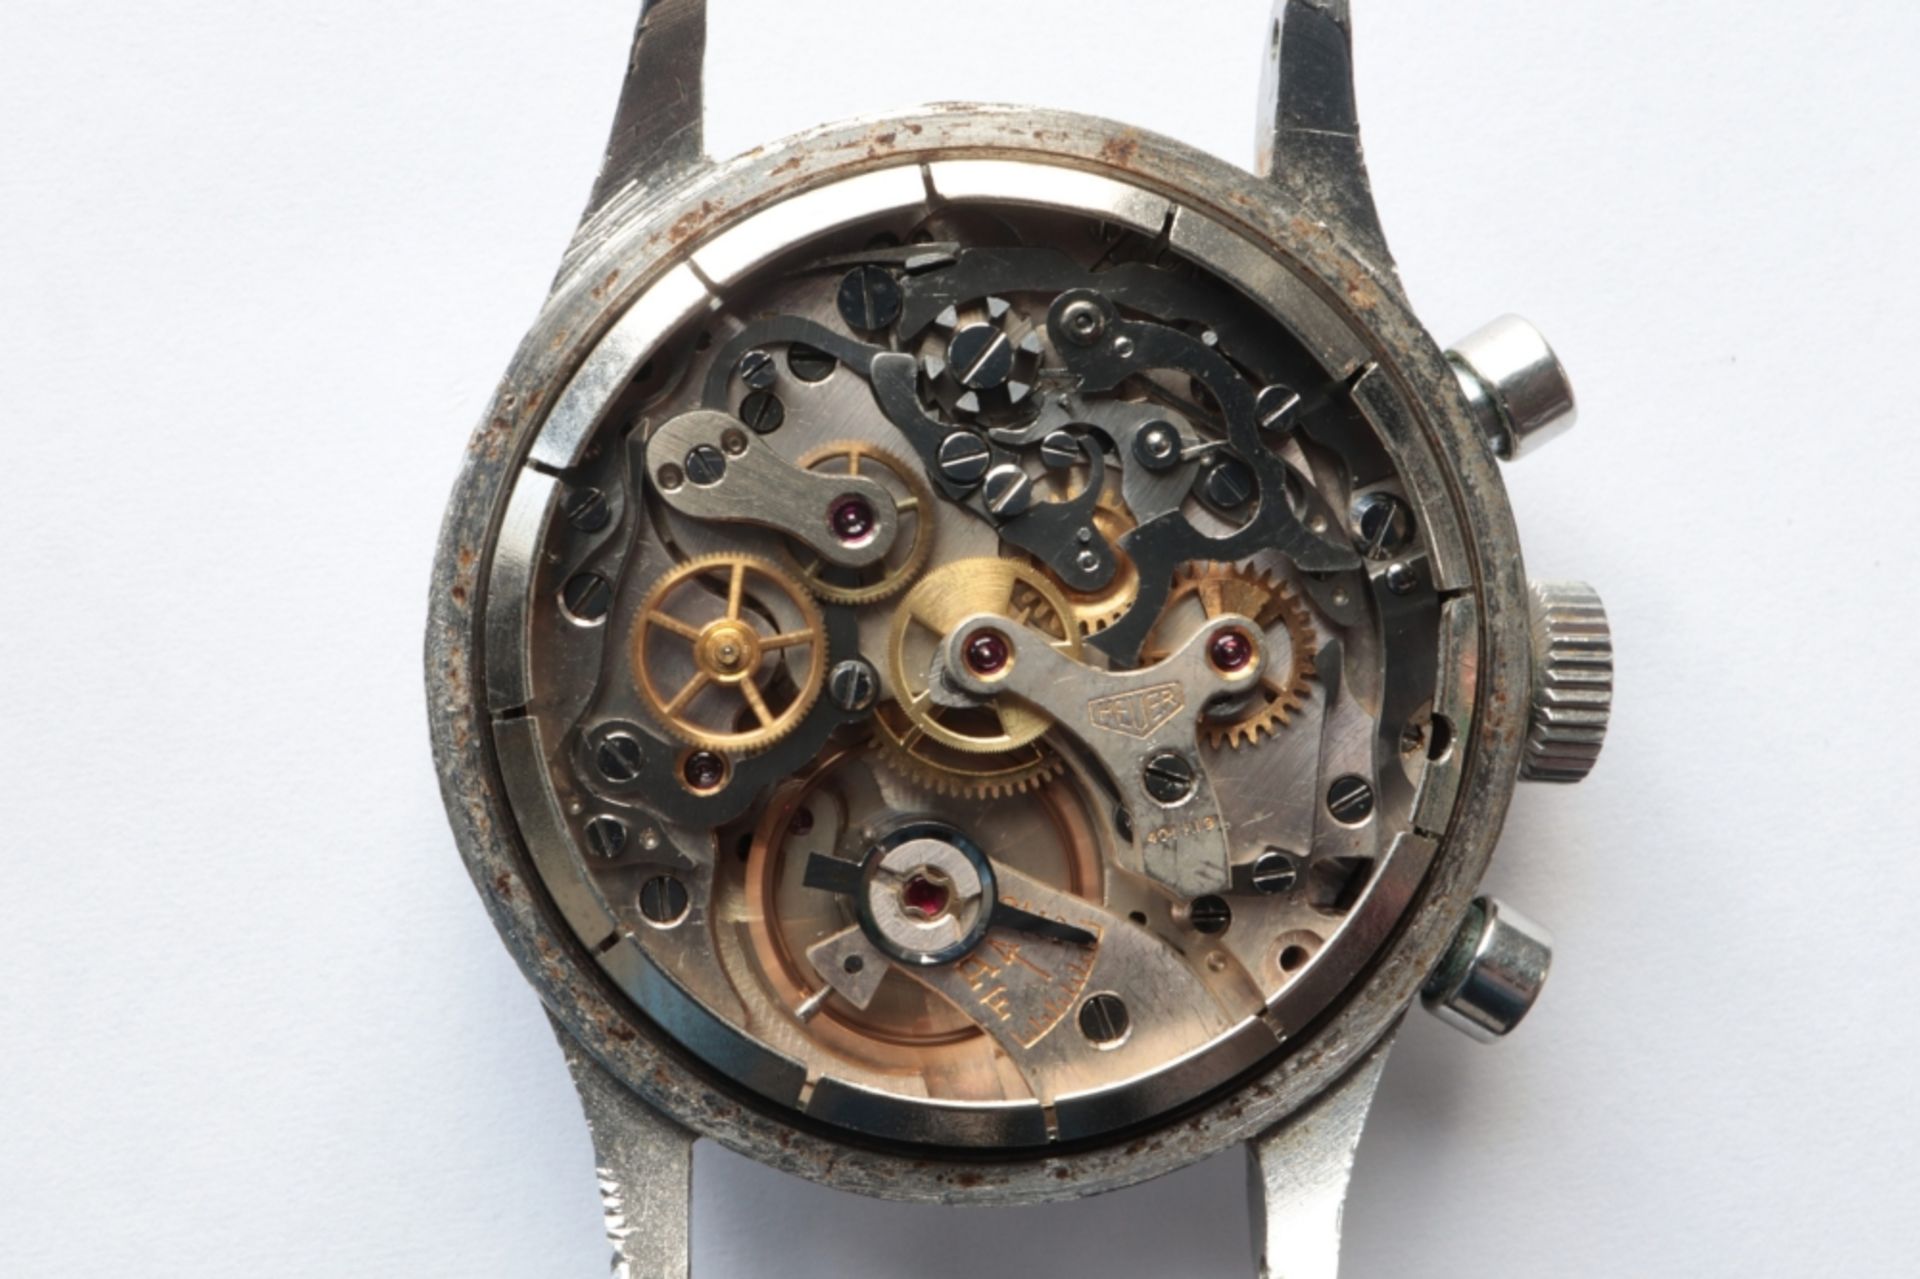 Heuer Heuer chronograph bracelet watch SWITZERLAND 1940-1950 Heuer "Big Eyes" manually-wound steel - Image 3 of 3